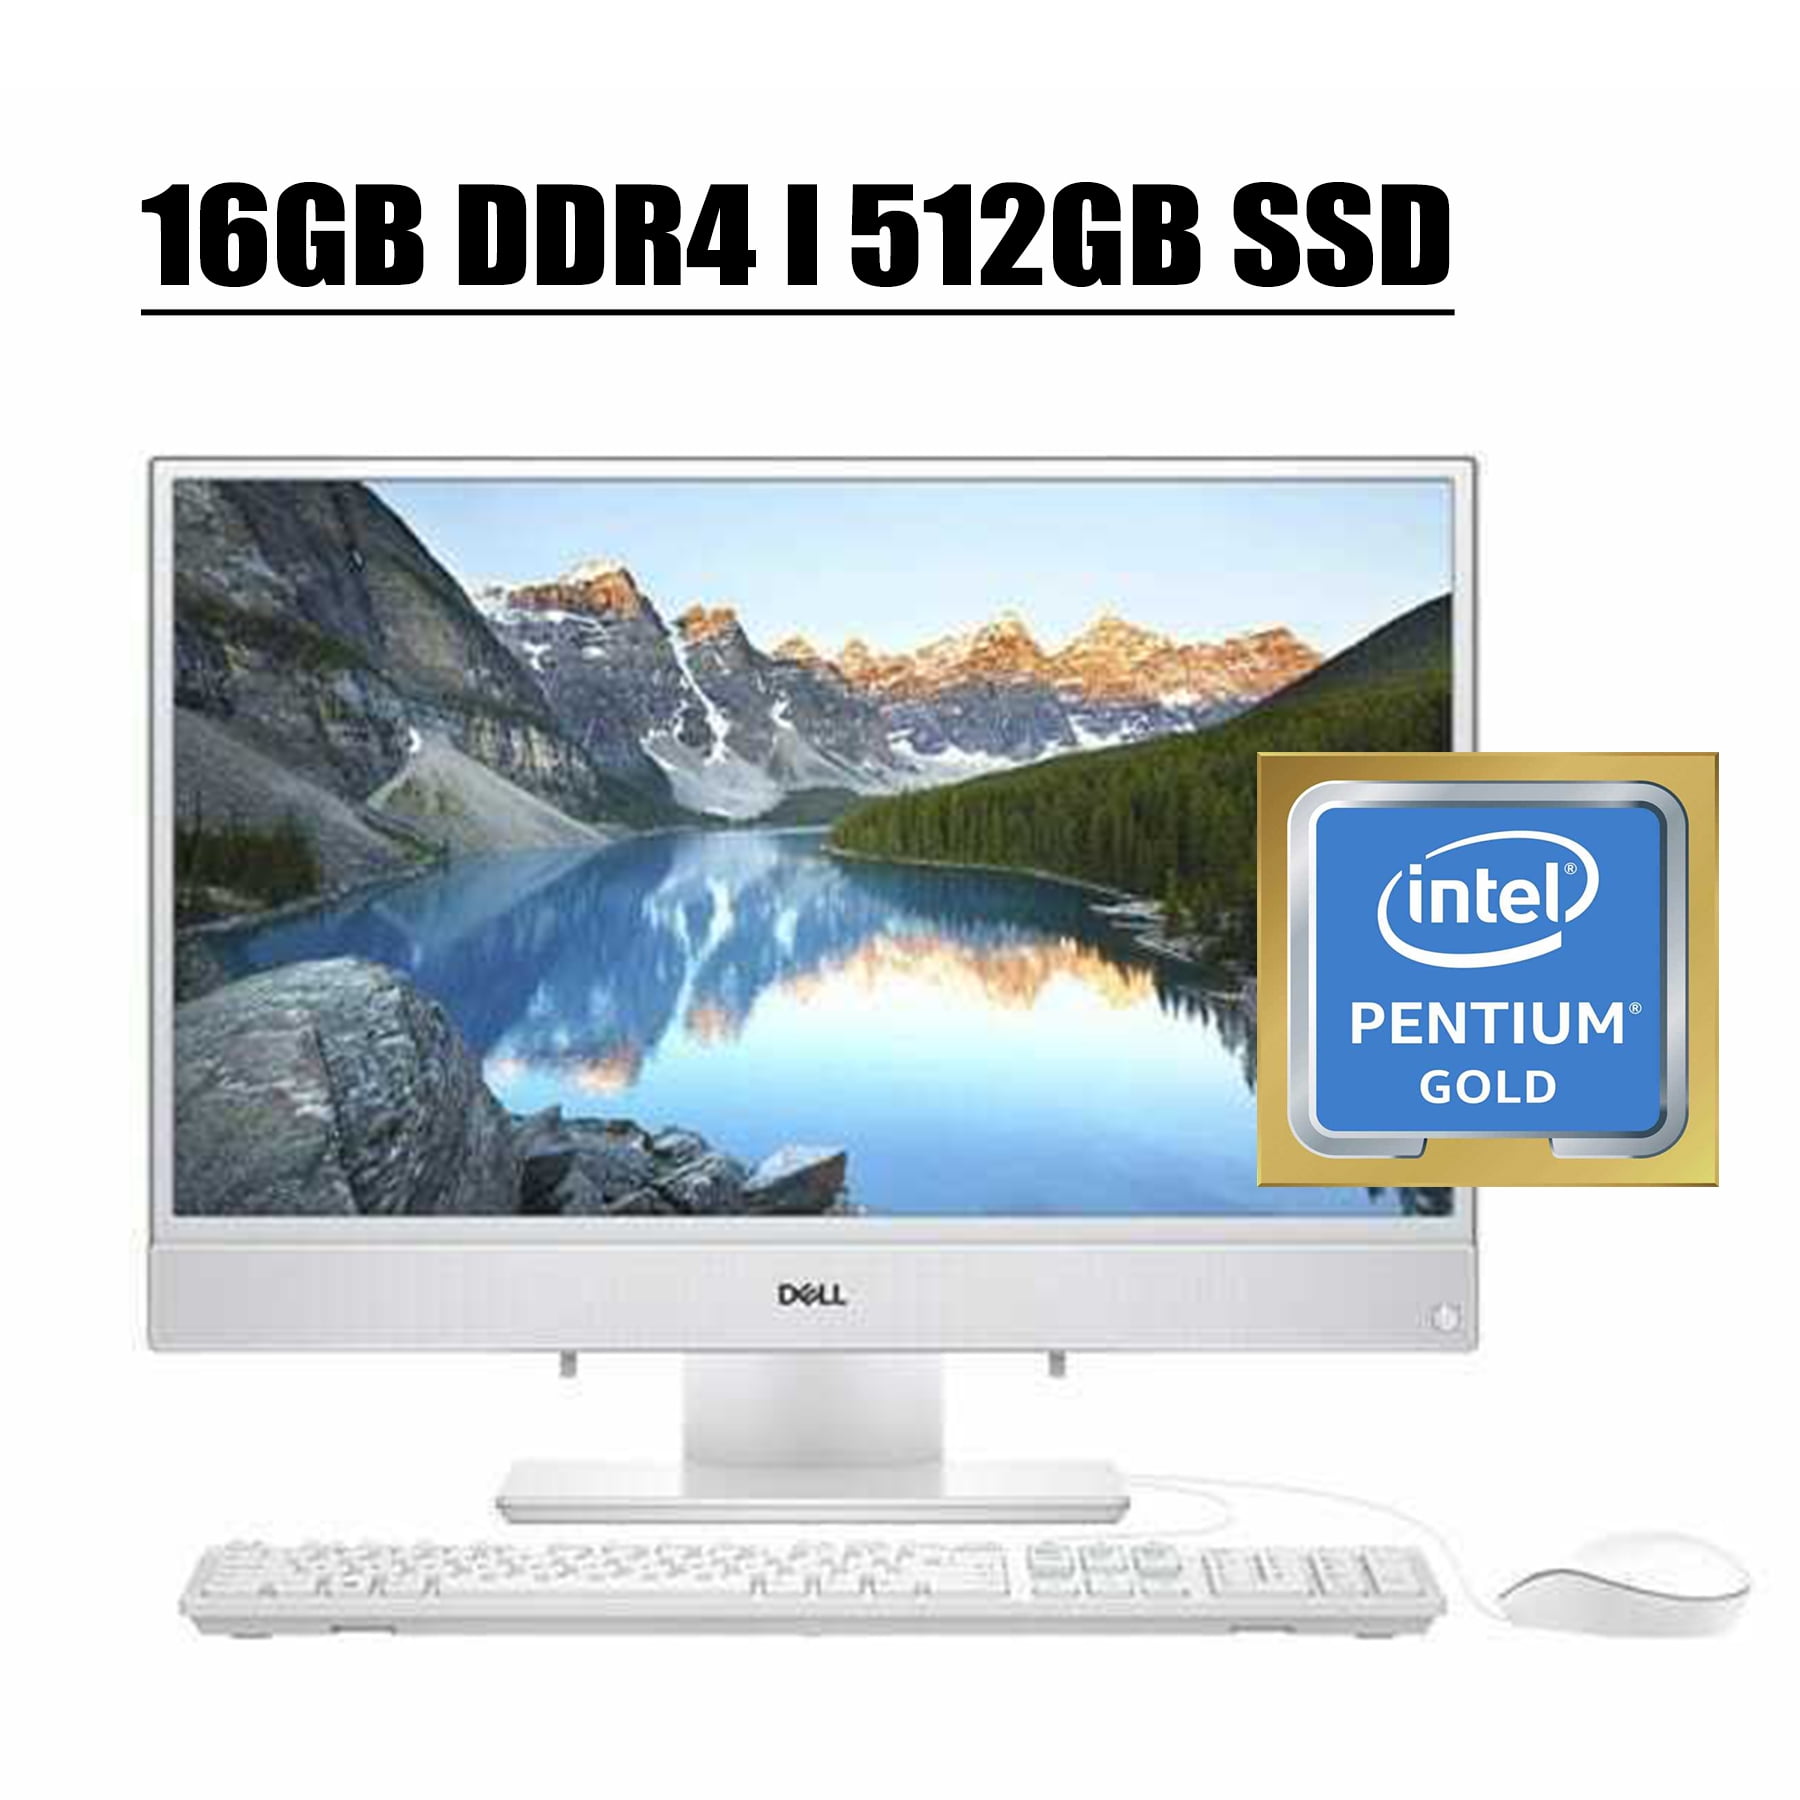 Flagship Dell Inspiron   Premium All in One Desktop Computer I  .5" Full HD IPS Anti Glare Display I Intel Pentium Gold U I GB DDR4